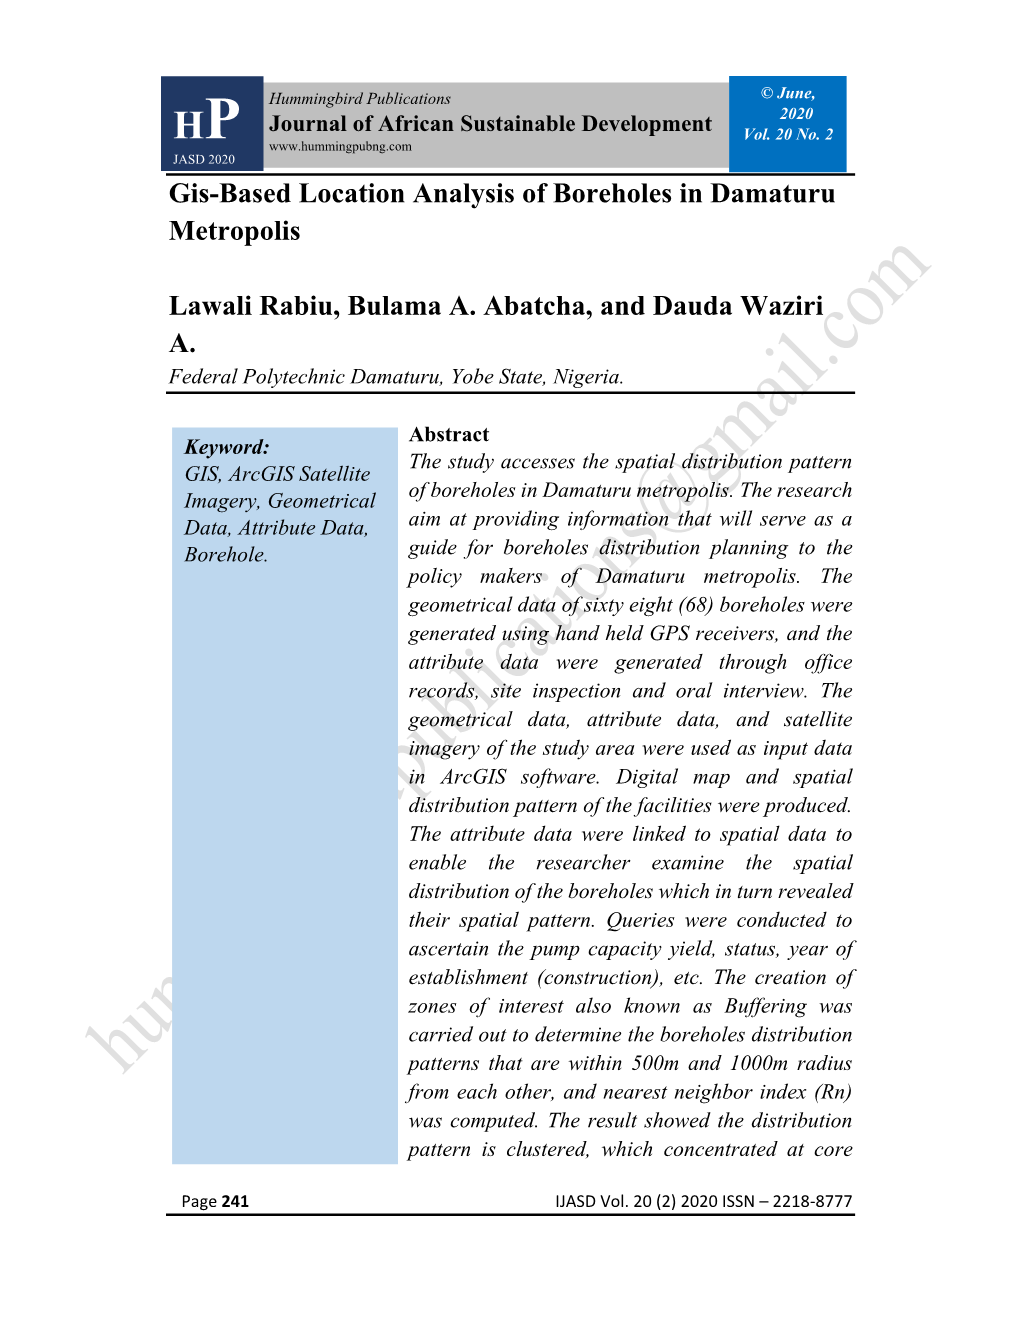 Gis-Based Location Analysis of Boreholes in Damaturu Metropolis